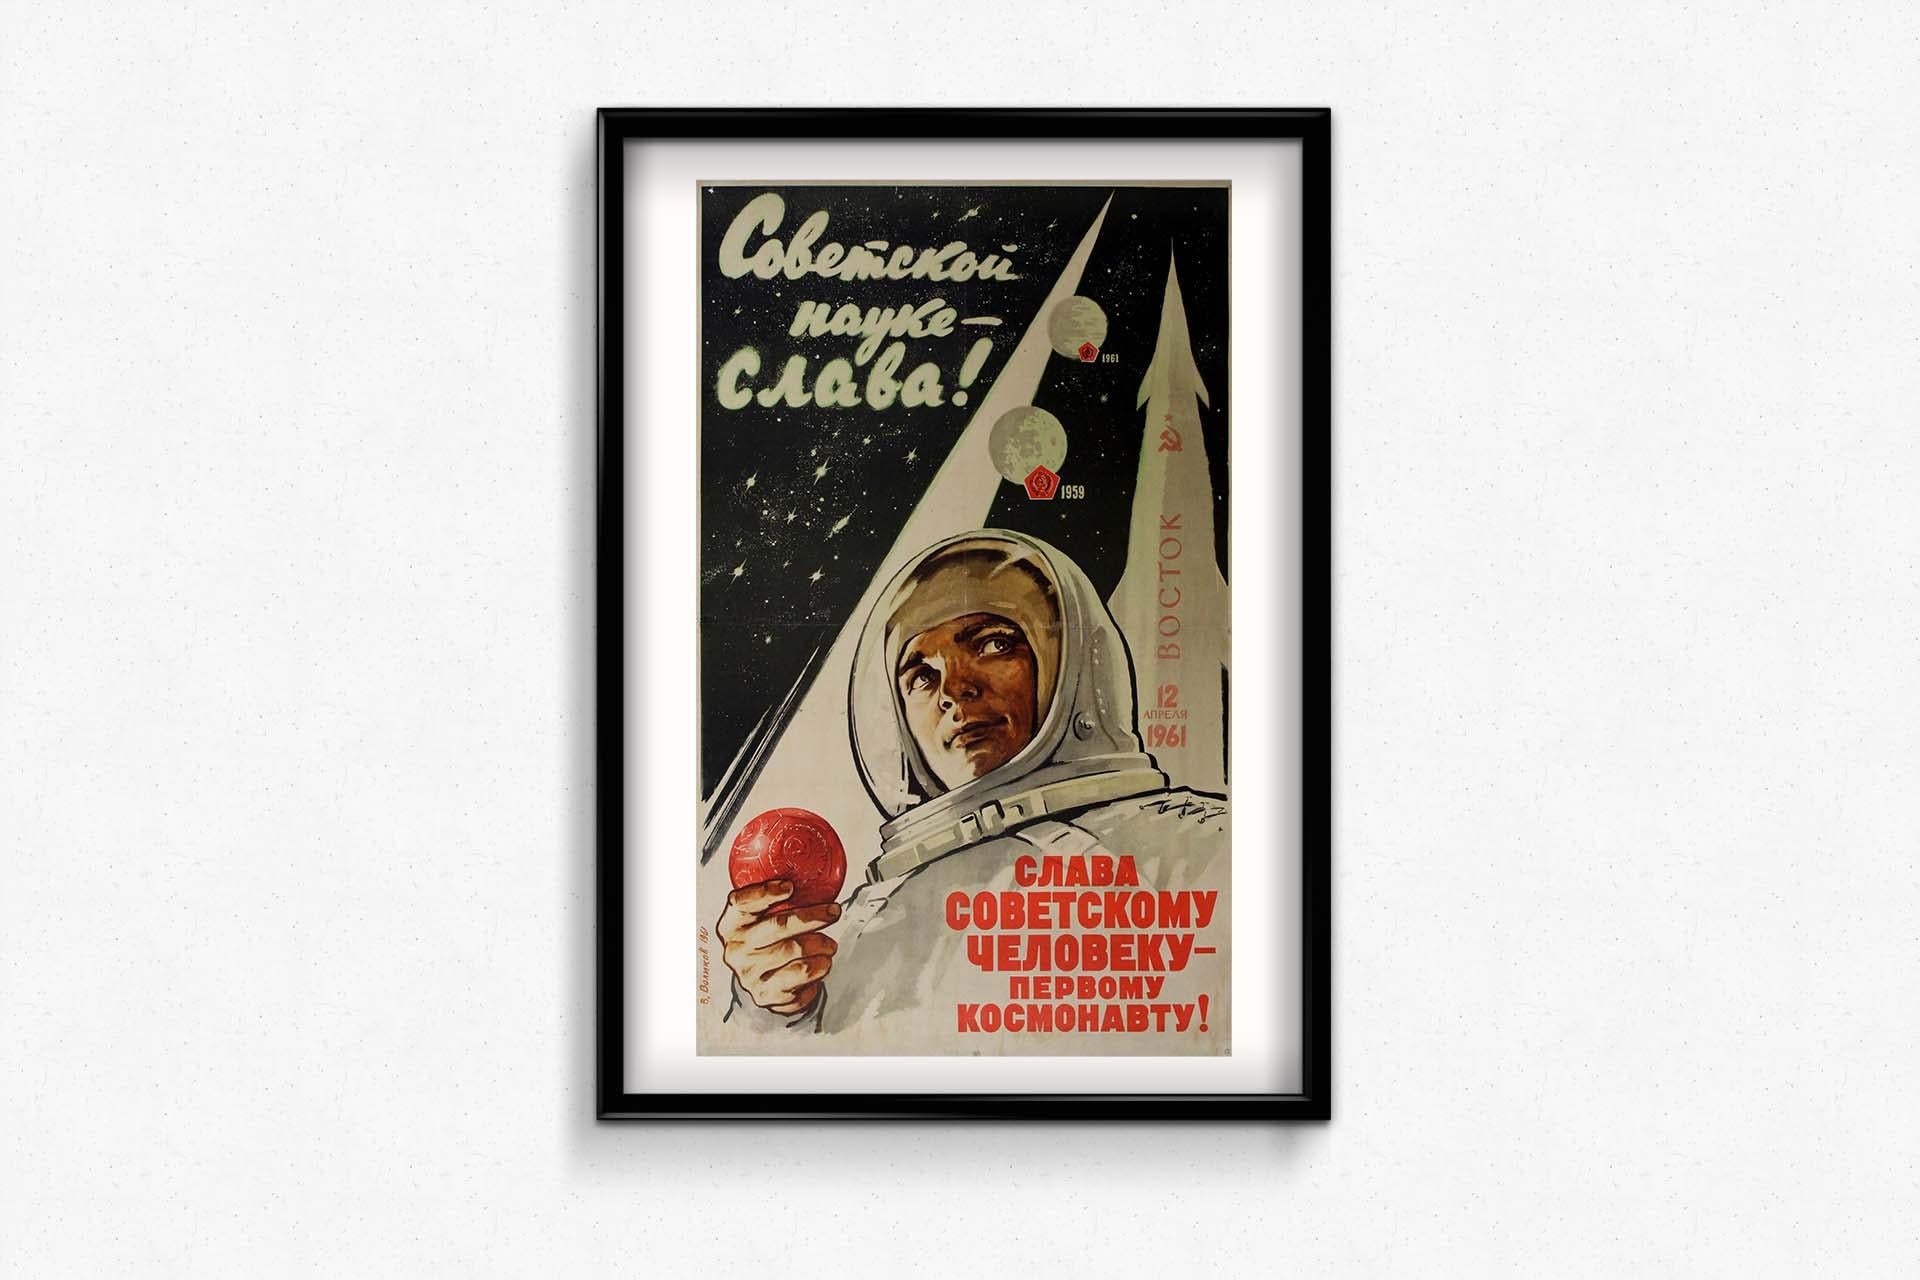 The 1961 original Soviet propaganda poster by V. Volikov, titled 